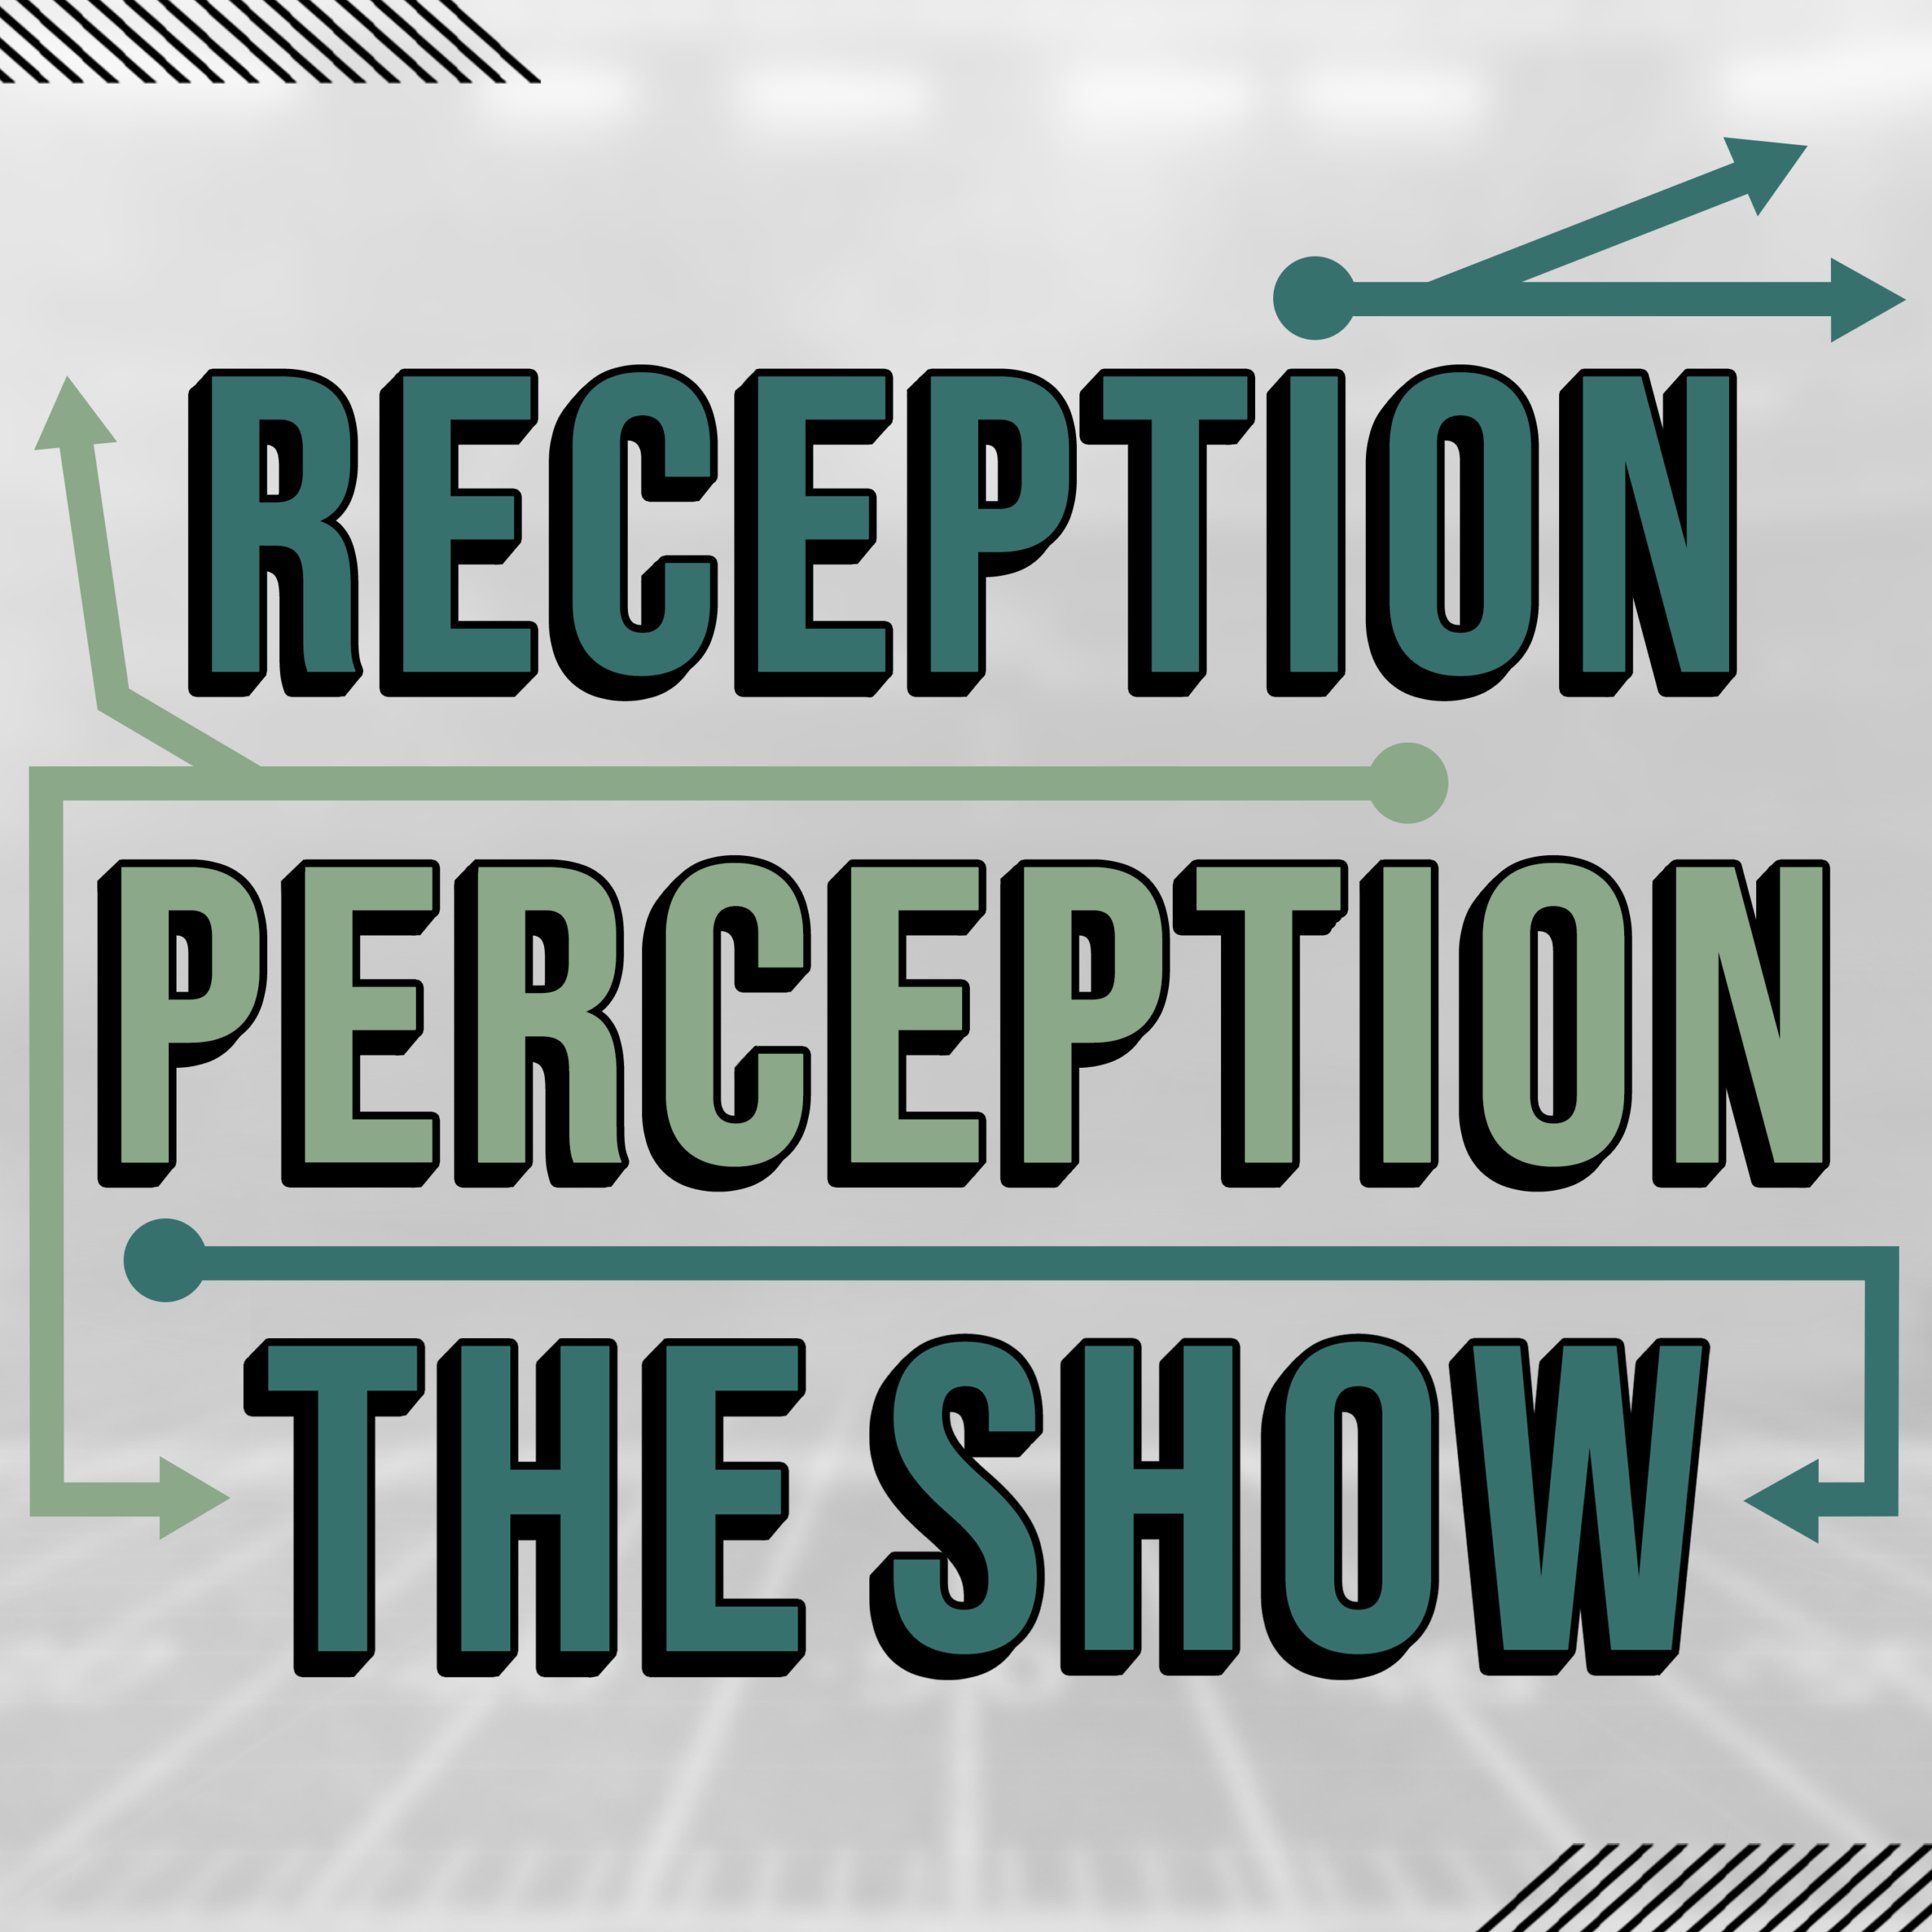 Reception Perception The Show – 2022 WR Blitz: Jefferson, Johnson, Hill, Bateman and Moore